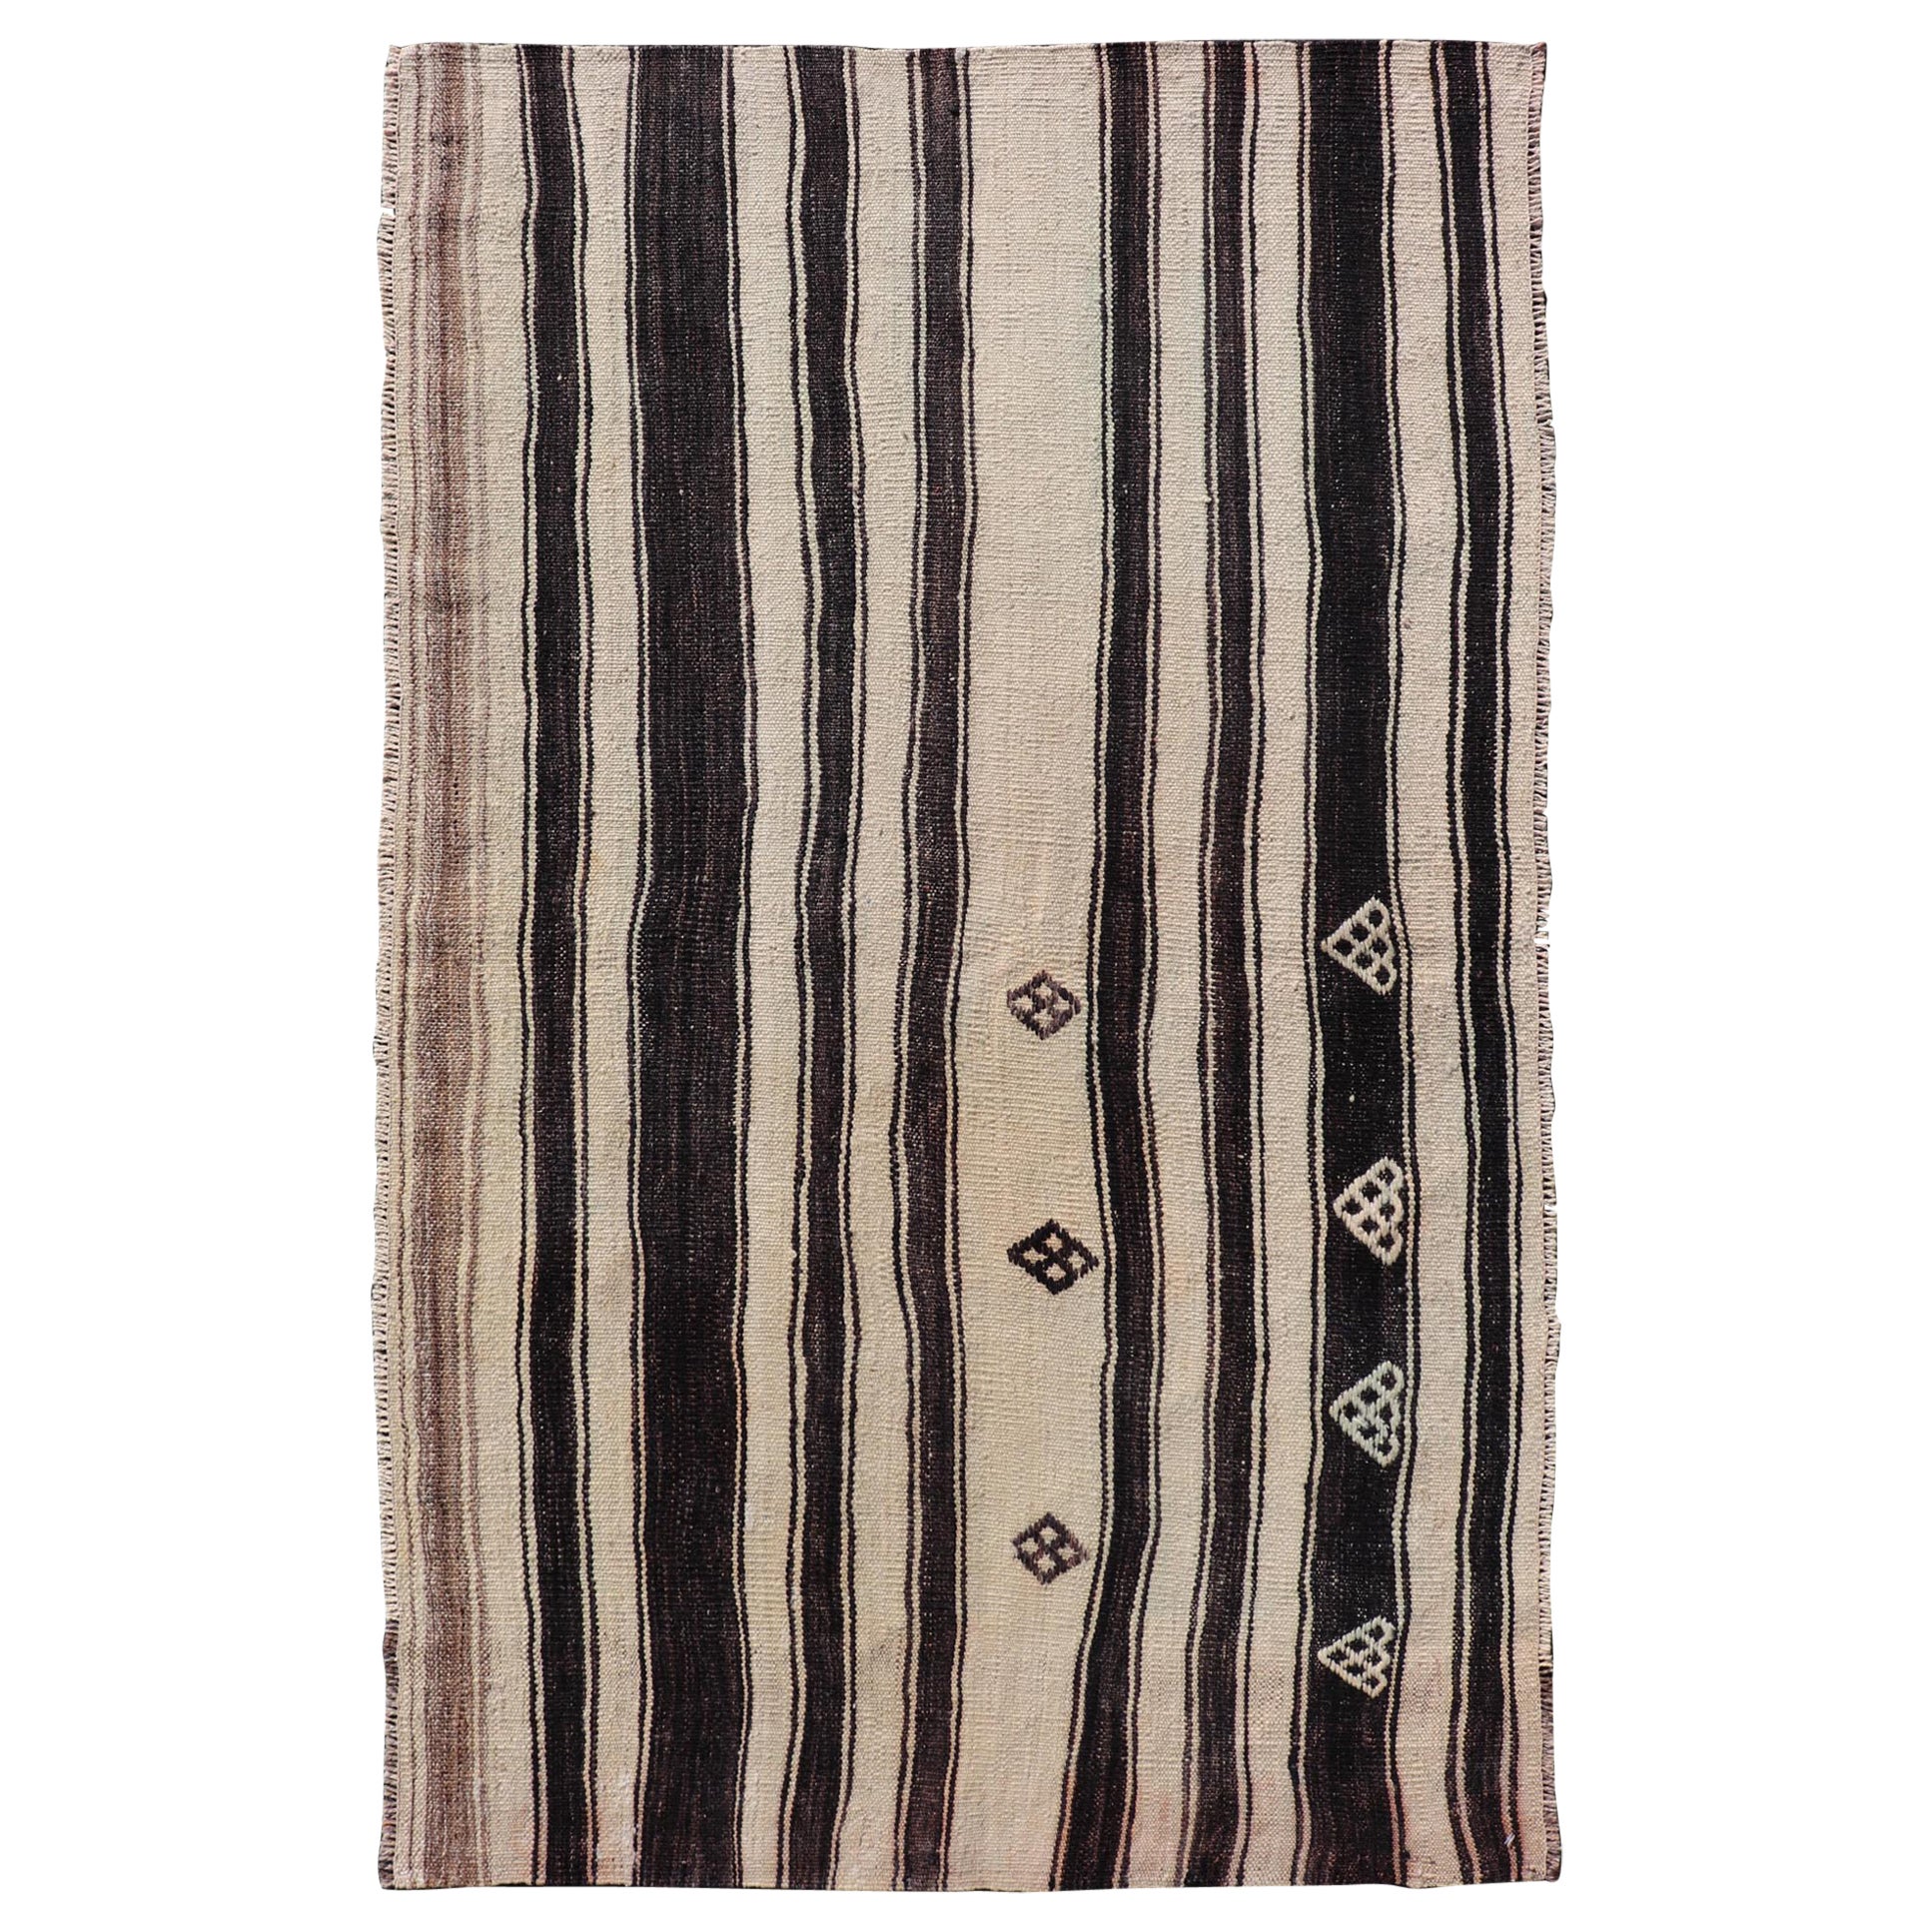 Stripe Design Turkish Vintage Flat-Weave Rug in Dark Brown, Taupe, and Cream 